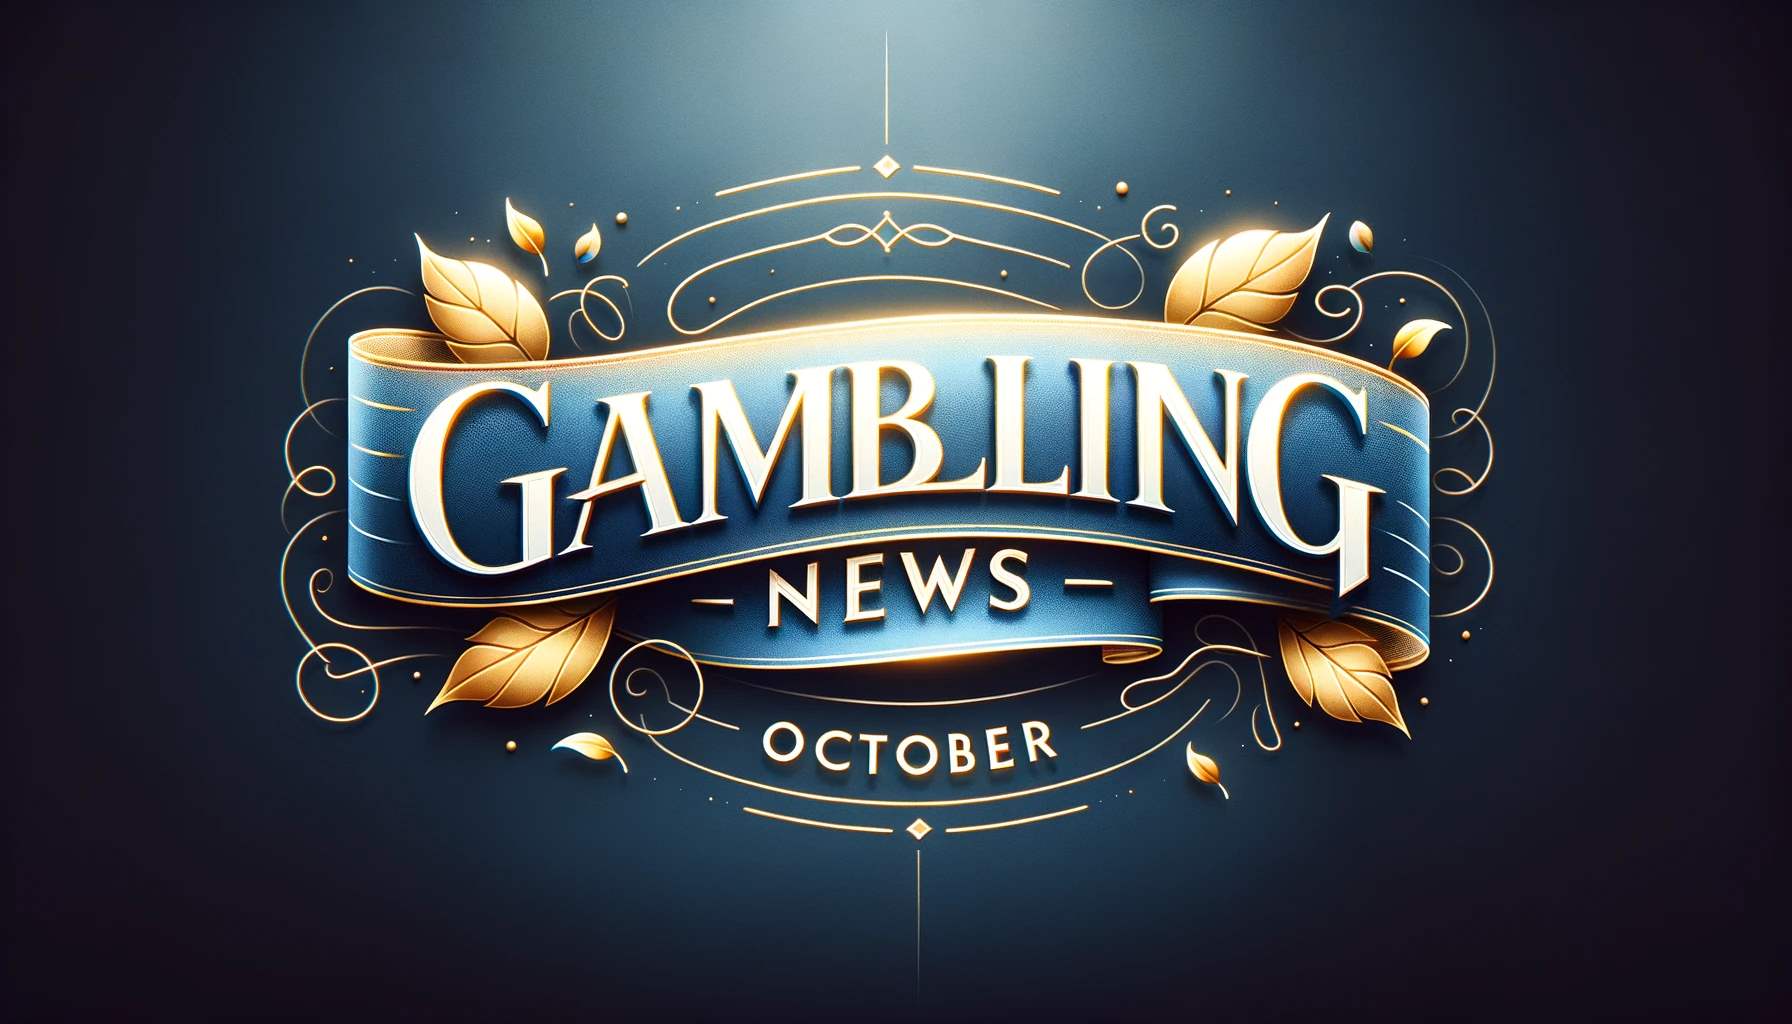 >>>Gambling News